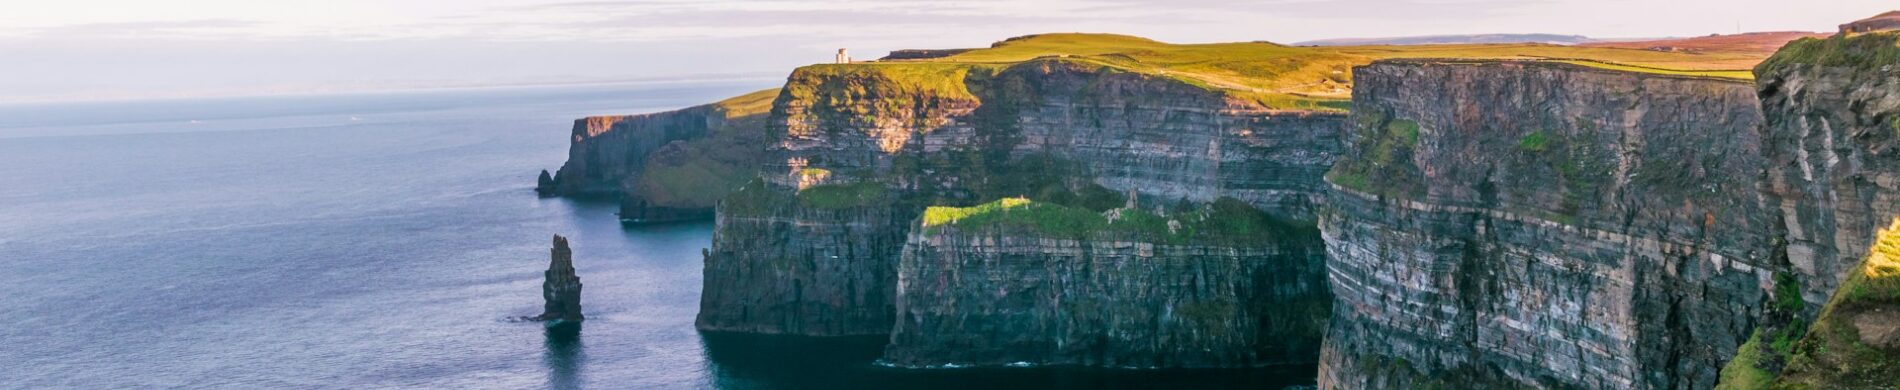 Destination : Irlande - Les matins du monde